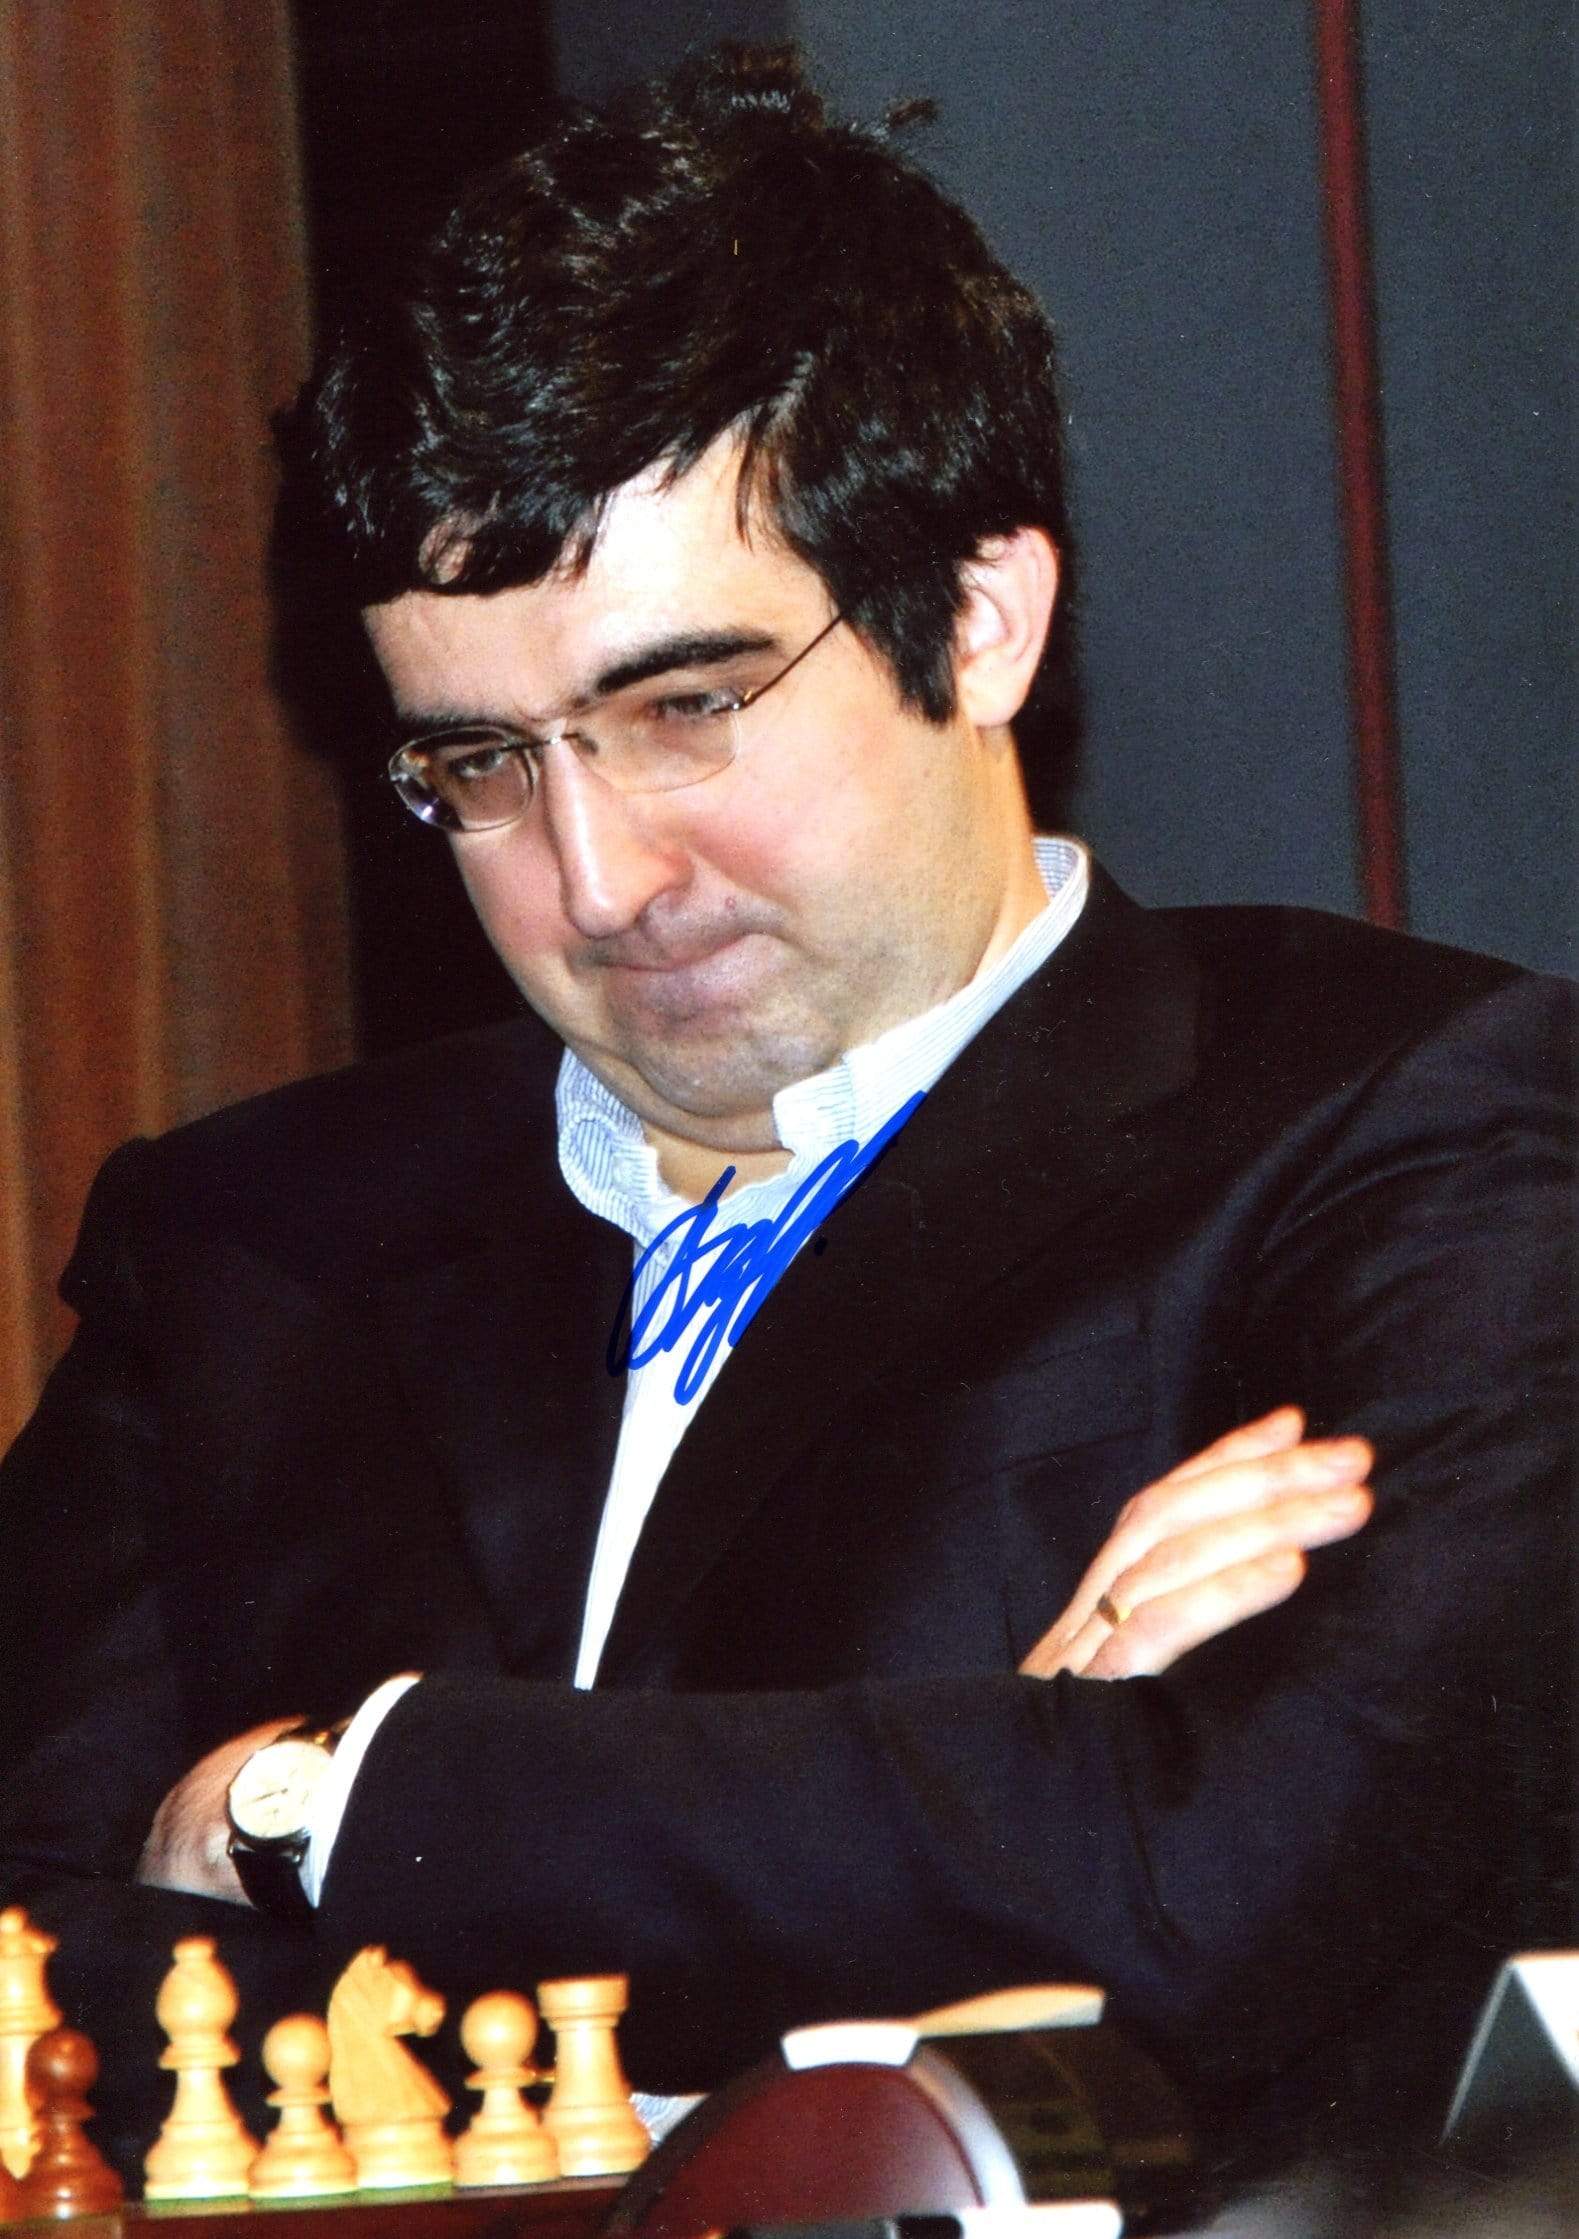 Wladimir Kramnik aktuell: News zum Schachspieler